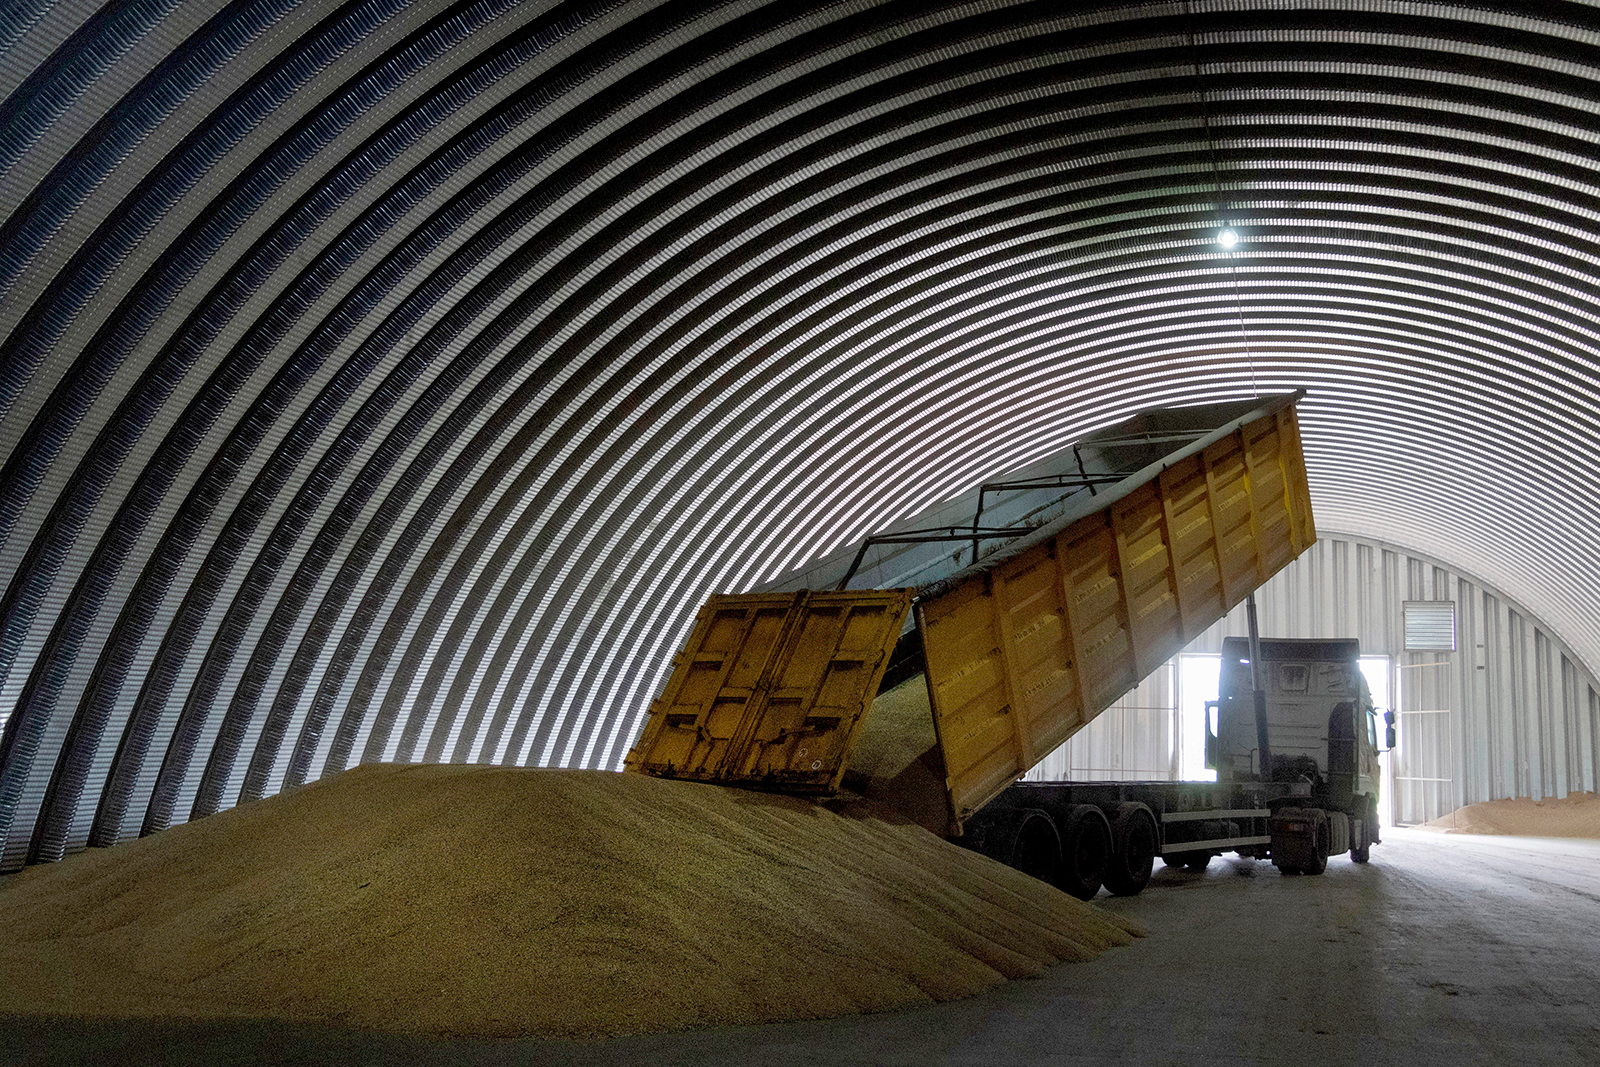 A dump track unloads grain in a granary in the village of Zghurivka, Ukraine, August 9, 2022.